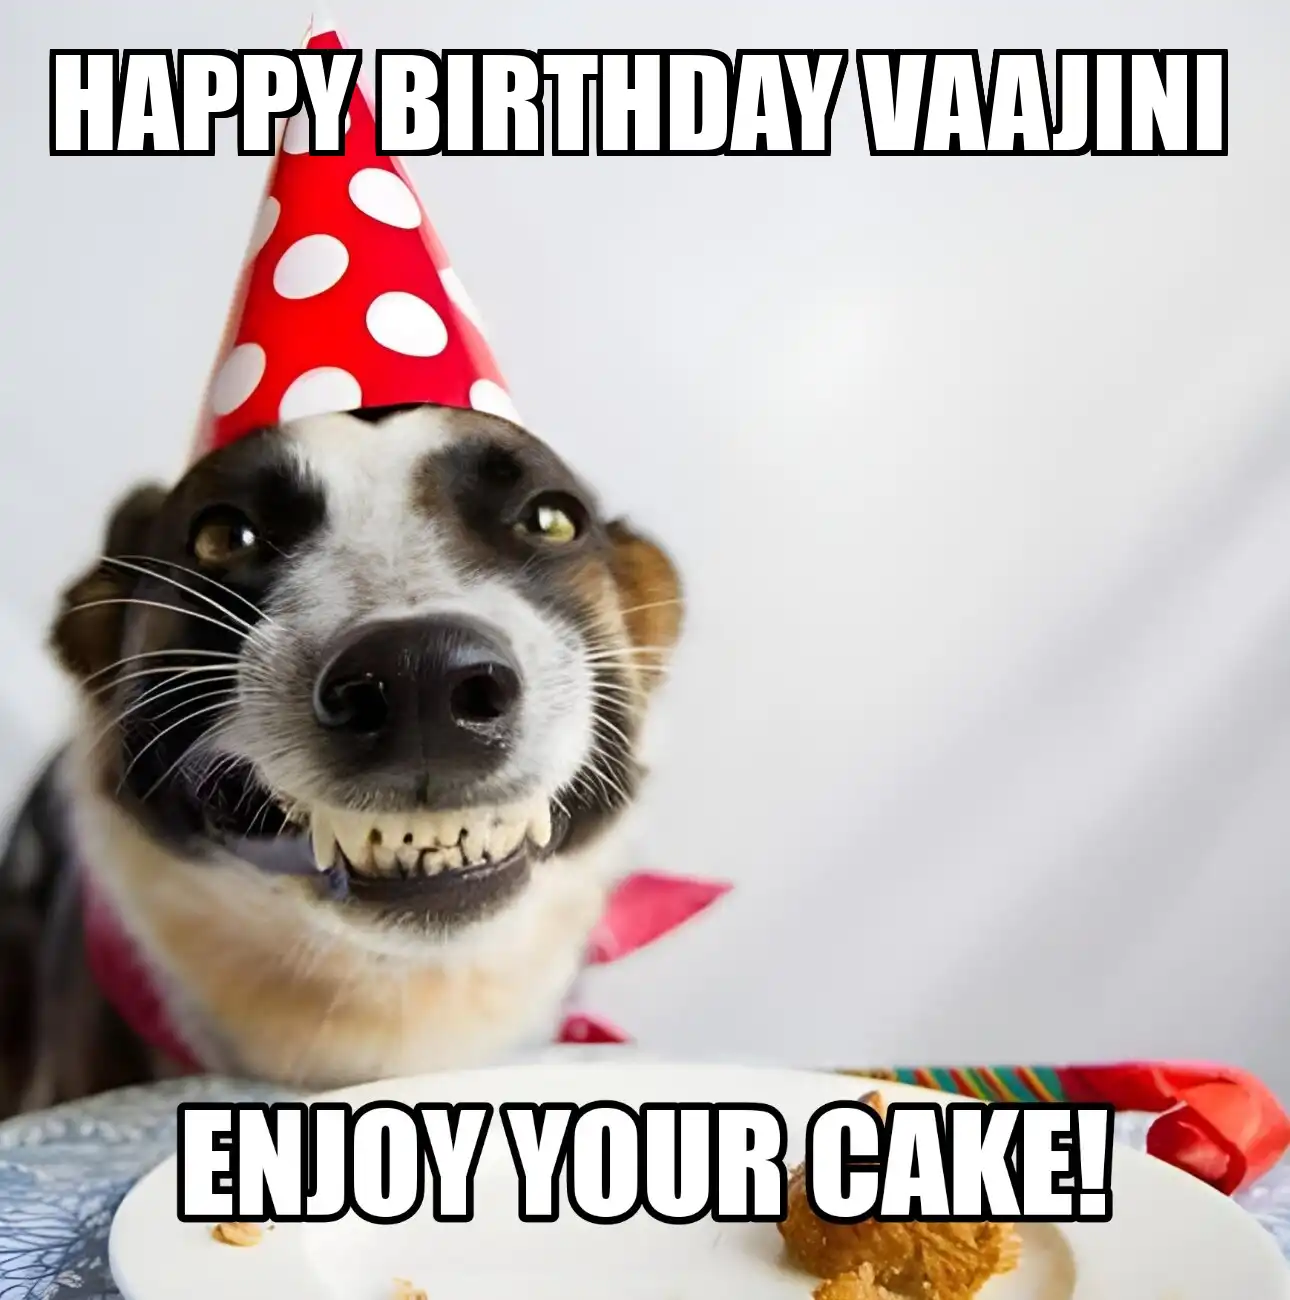 Happy Birthday Vaajini Enjoy Your Cake Dog Meme